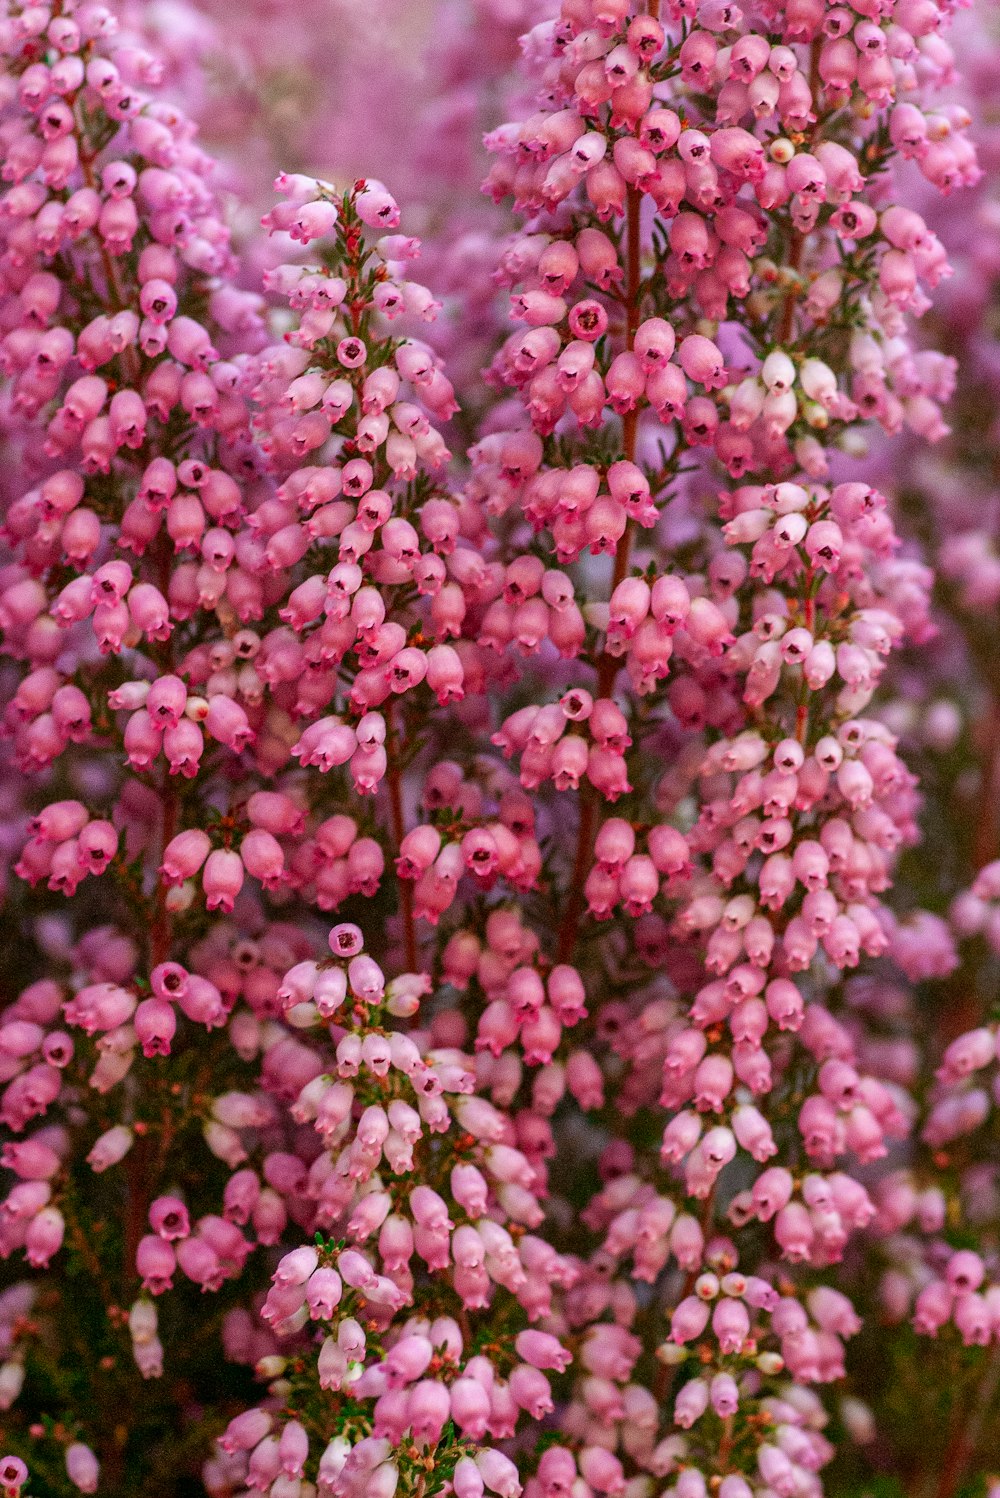 flores cor-de-rosa